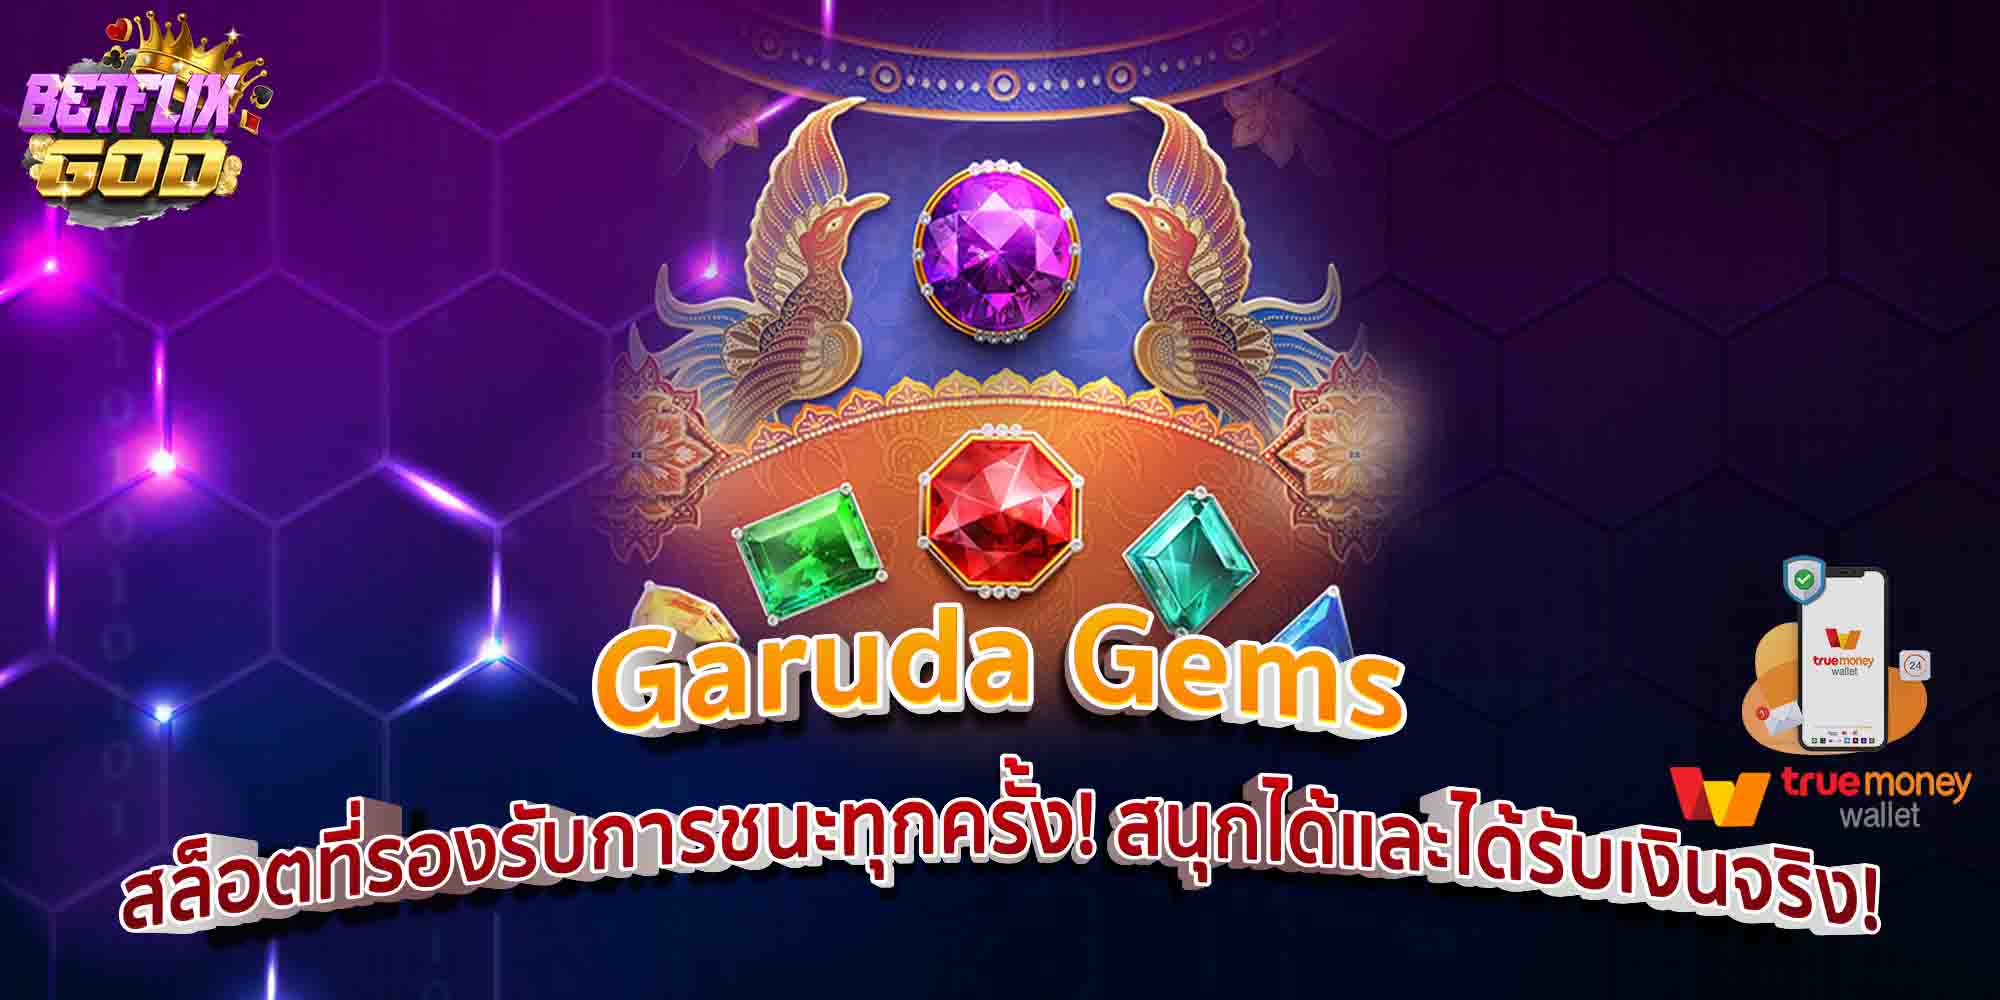 Garuda Gems สล็อตที่รองรับการชนะทุกครั้ง! สนุกได้และได้รับเงินจริง!